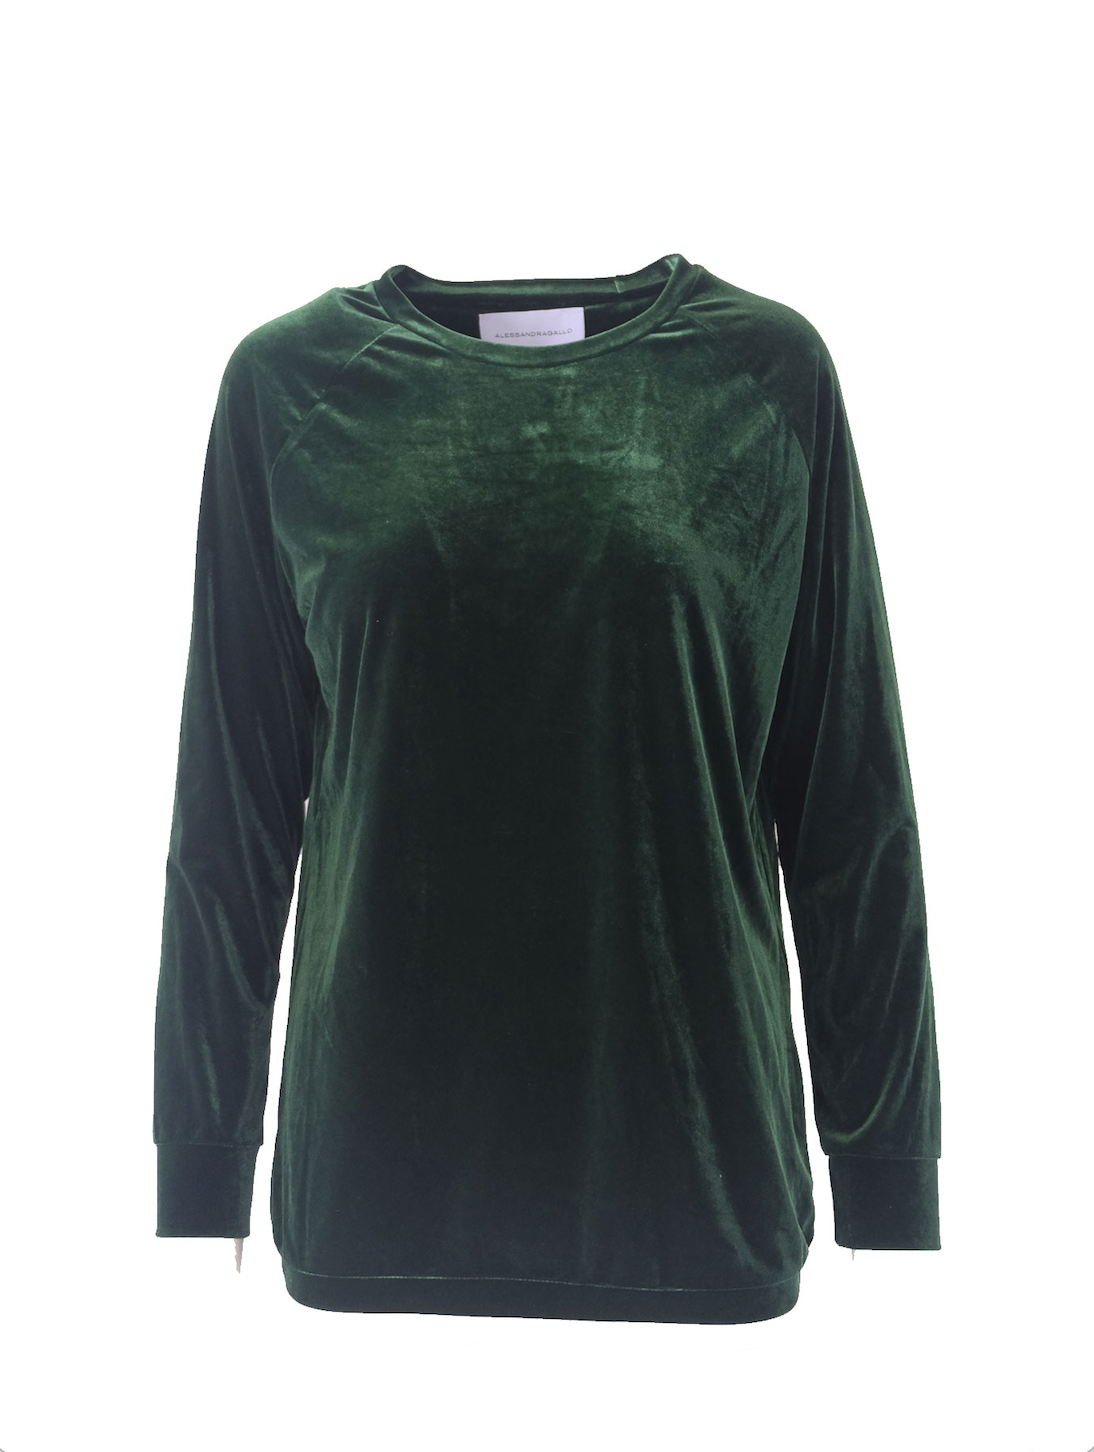 FLORA - chenille sweatshirt in emerald green